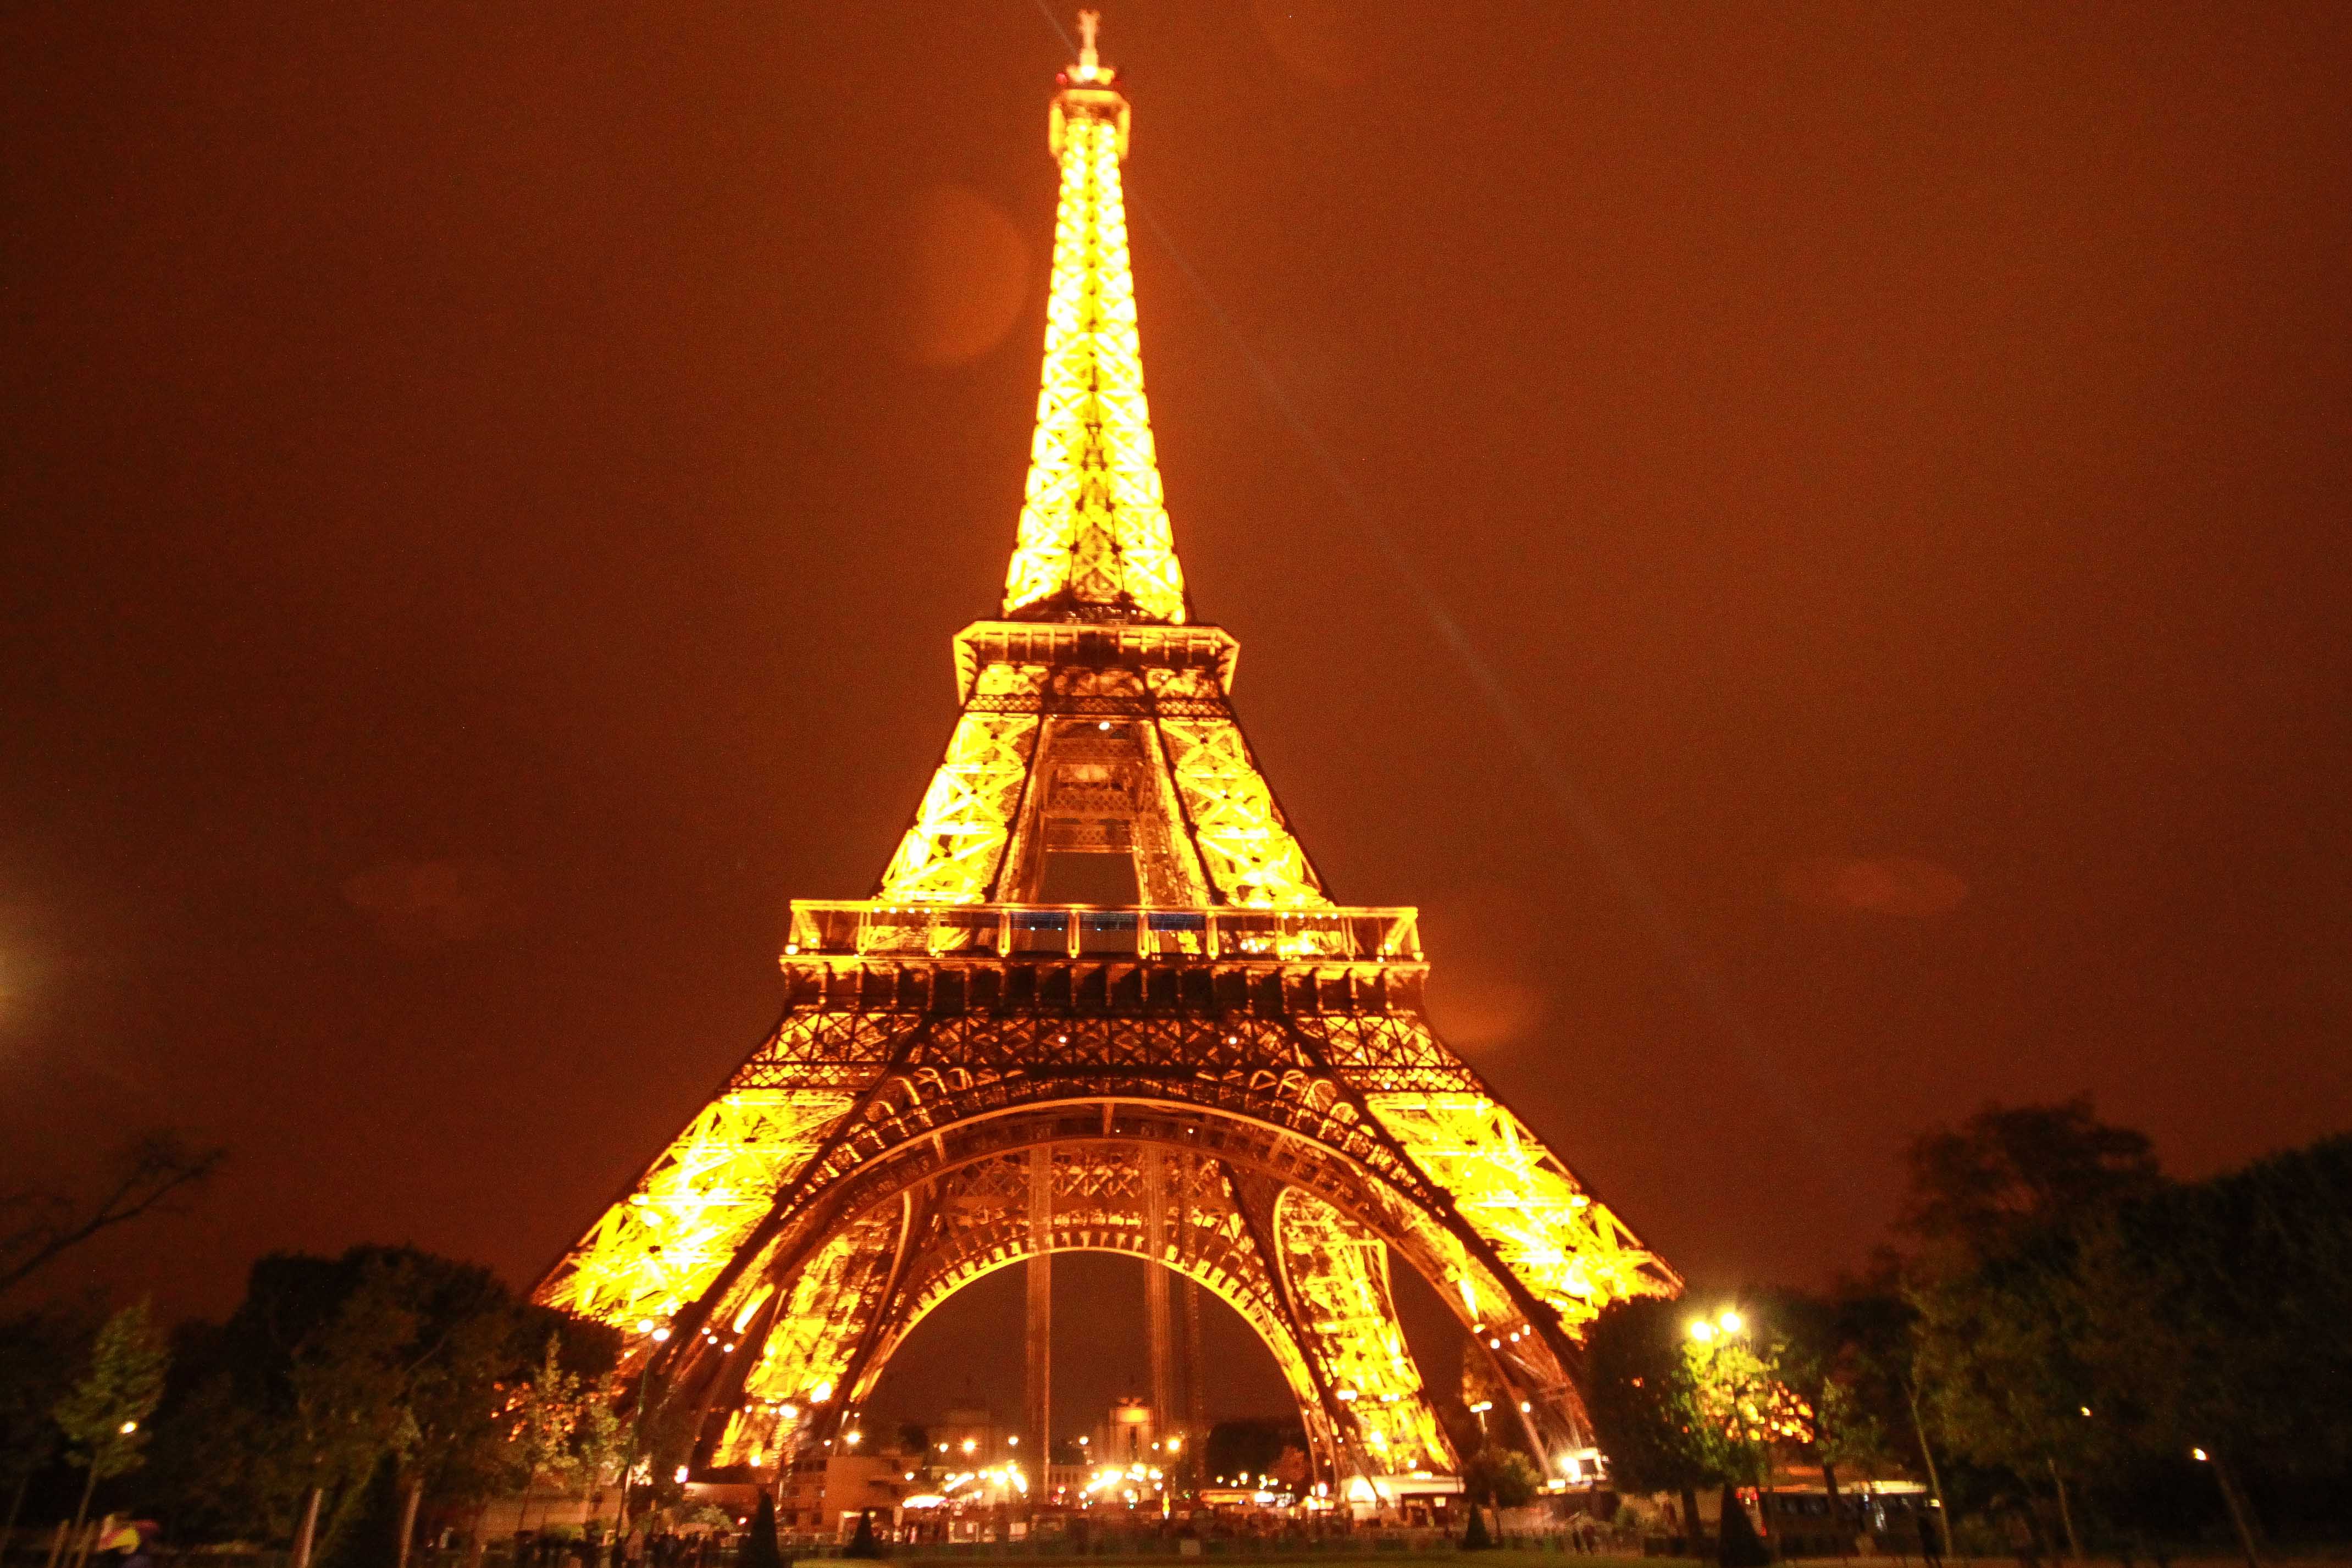 Paris travel: The Eiffel Tower at night